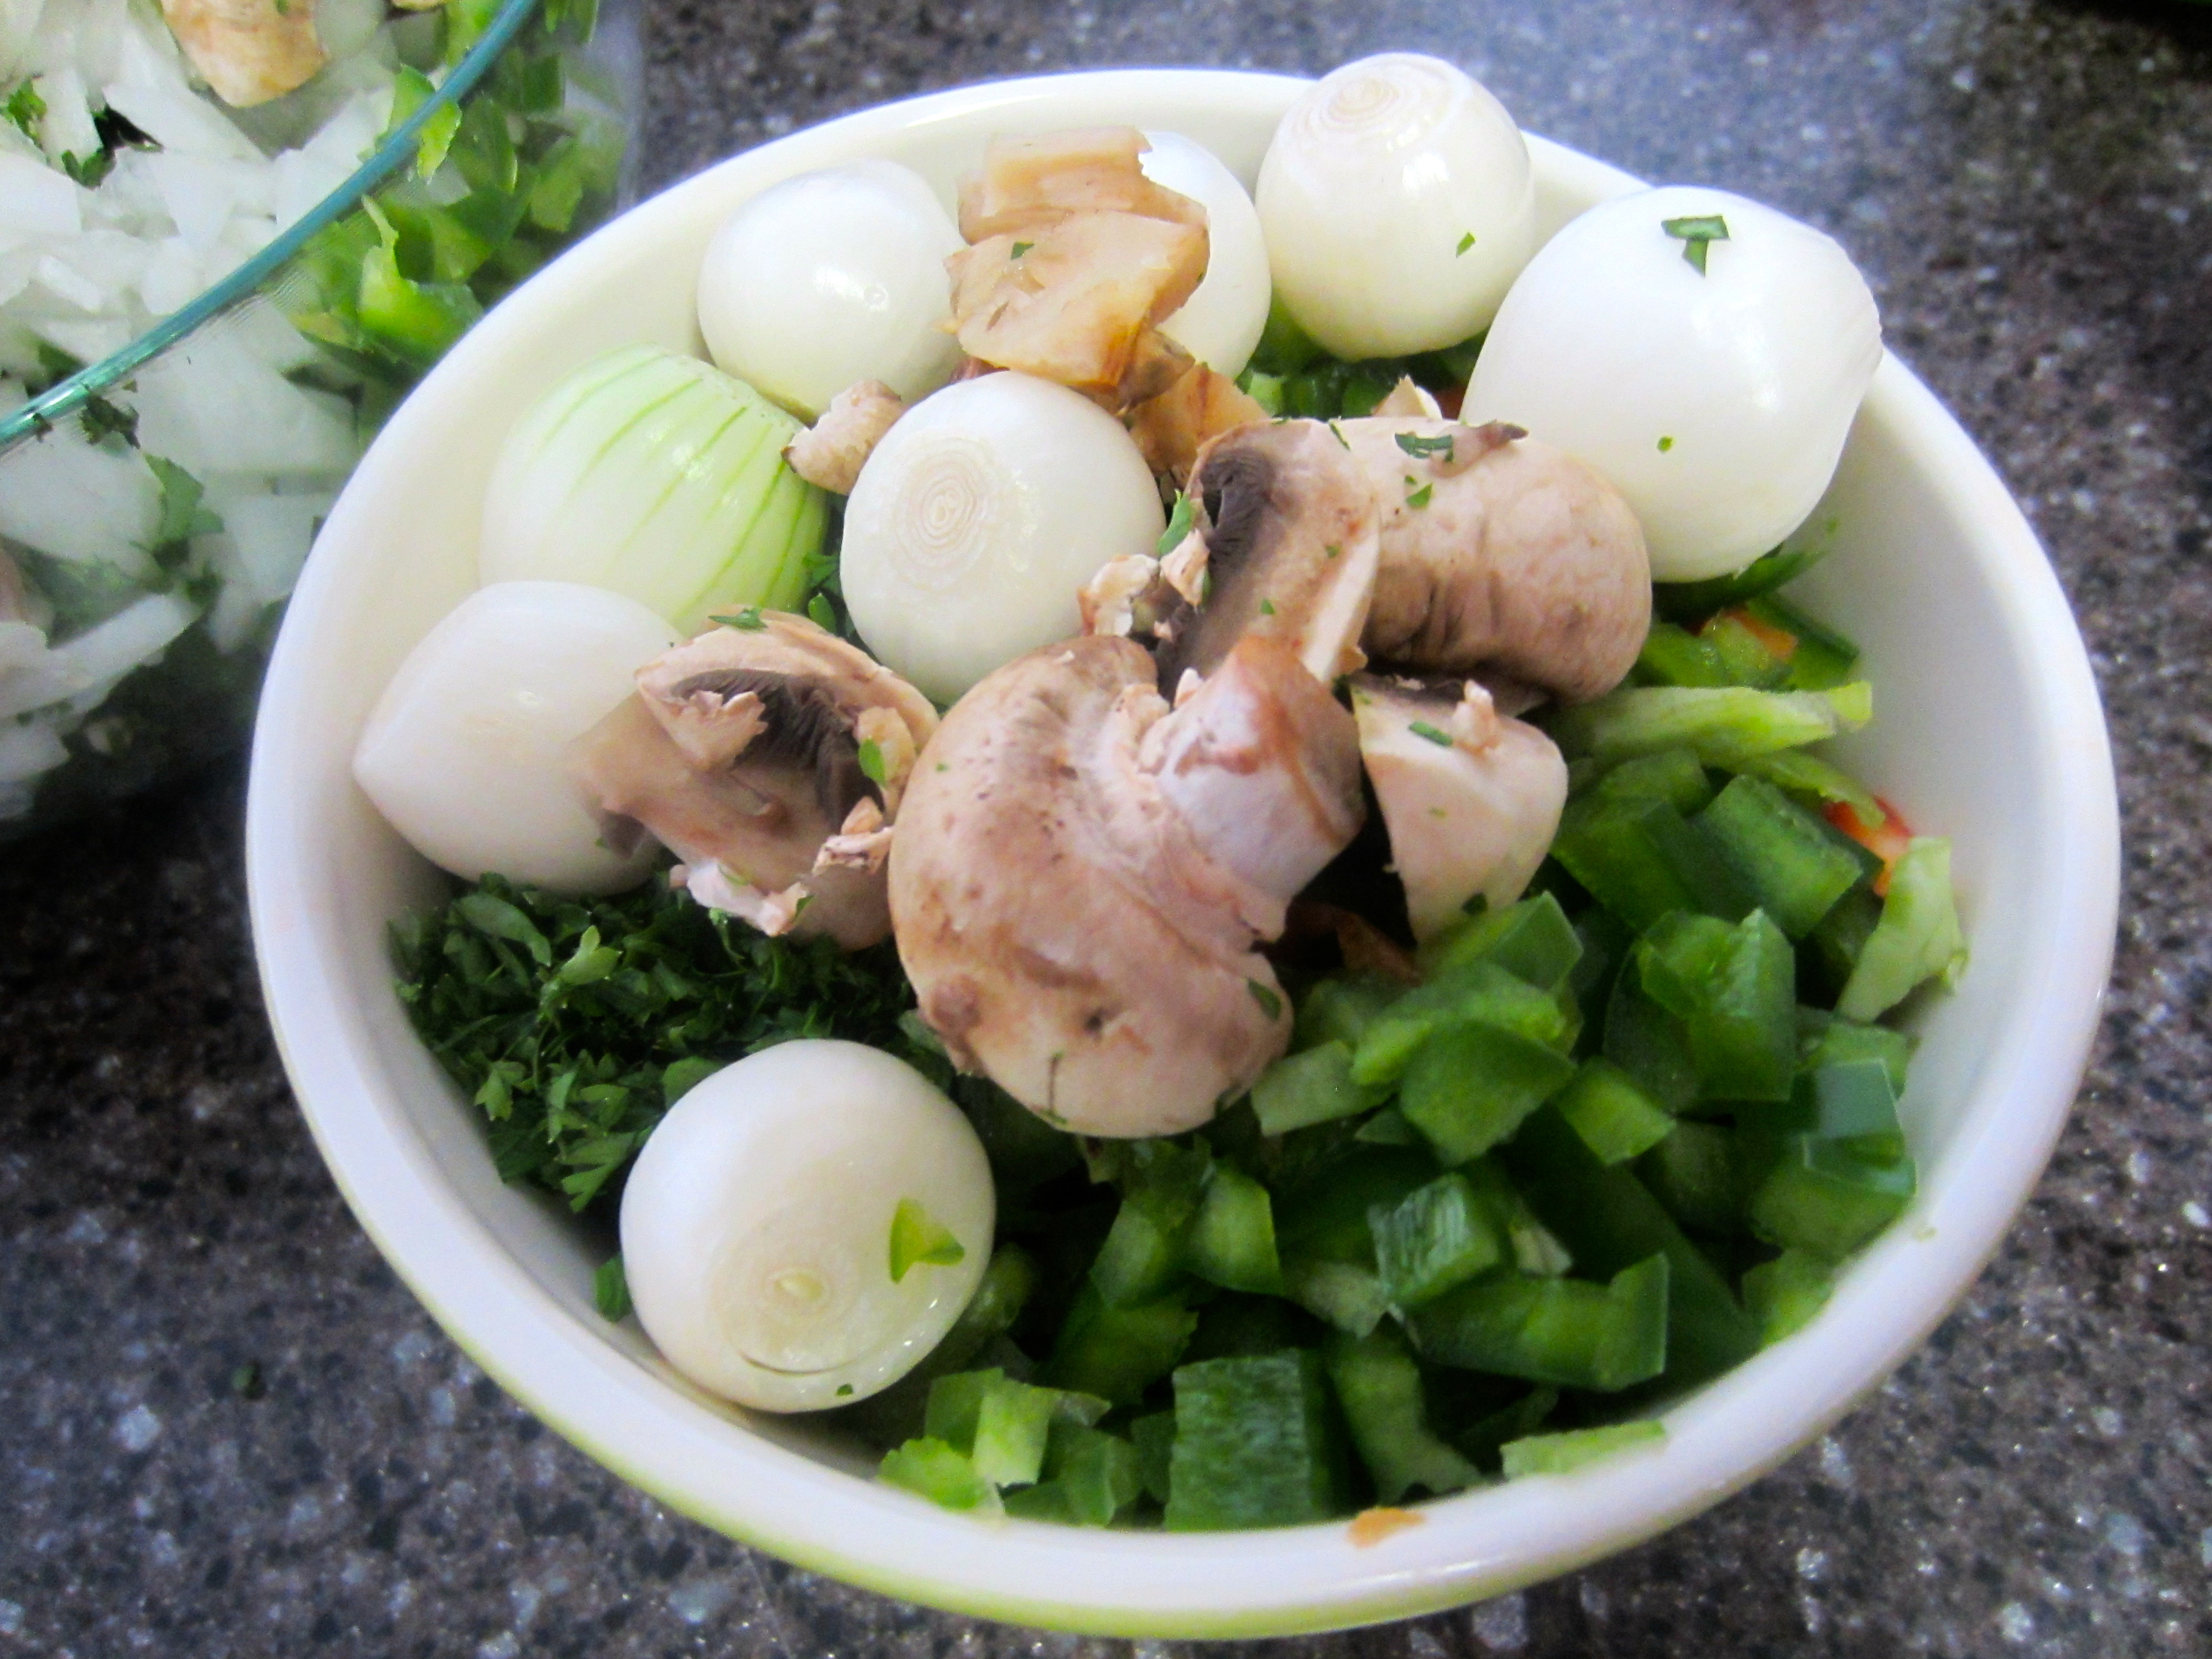 seperate veggies for garlic allergy